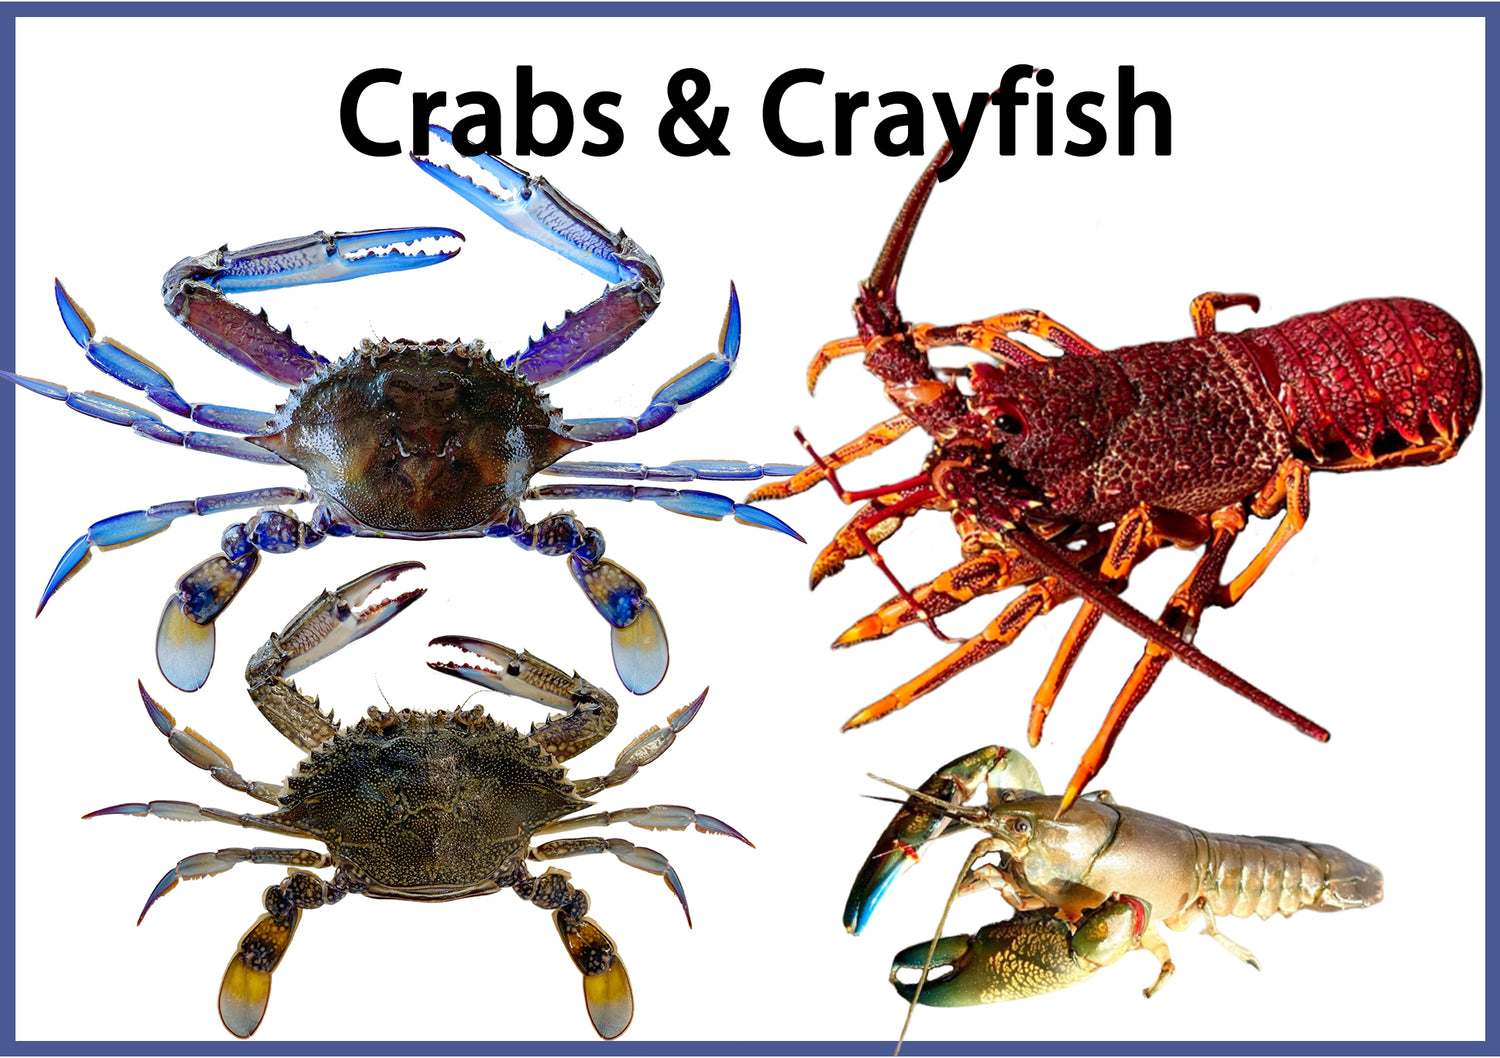 Crabs and Crayfish